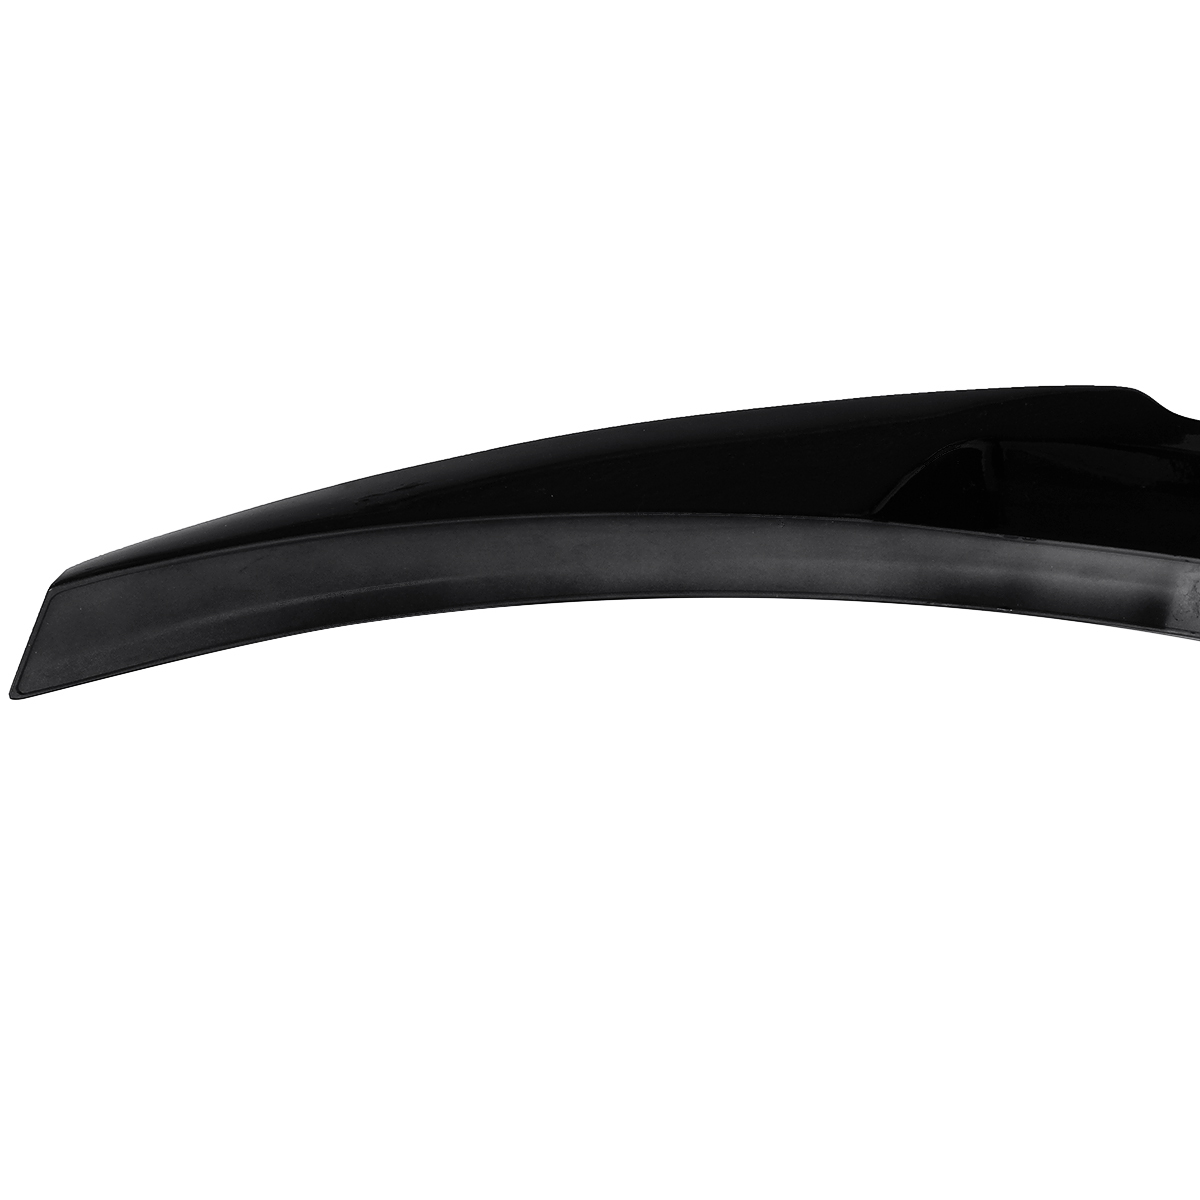 Glossy Black/Carbon Fiber Color ABS Car Rear Trunk Spoiler Wing Lip for Infiniti Q50 2014-2020